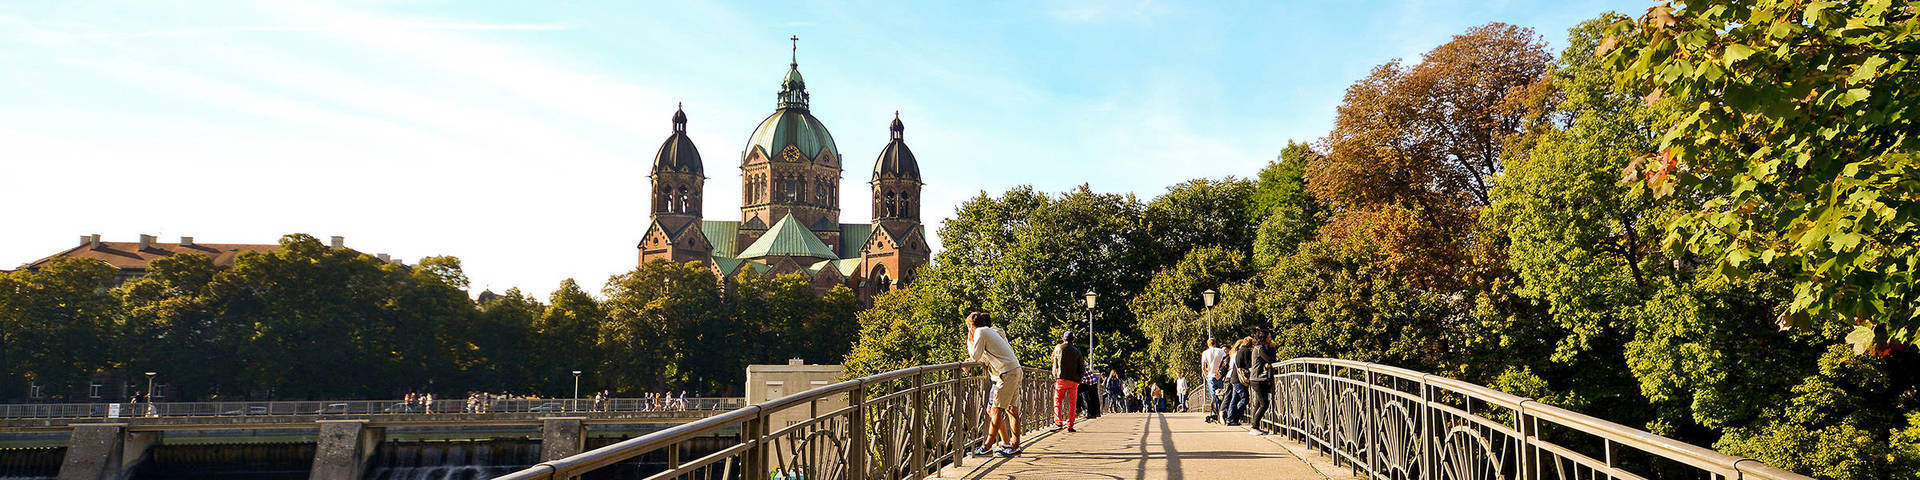 Sankt Lukas Kirche - H-Hotels in München - Offizielle Webseite